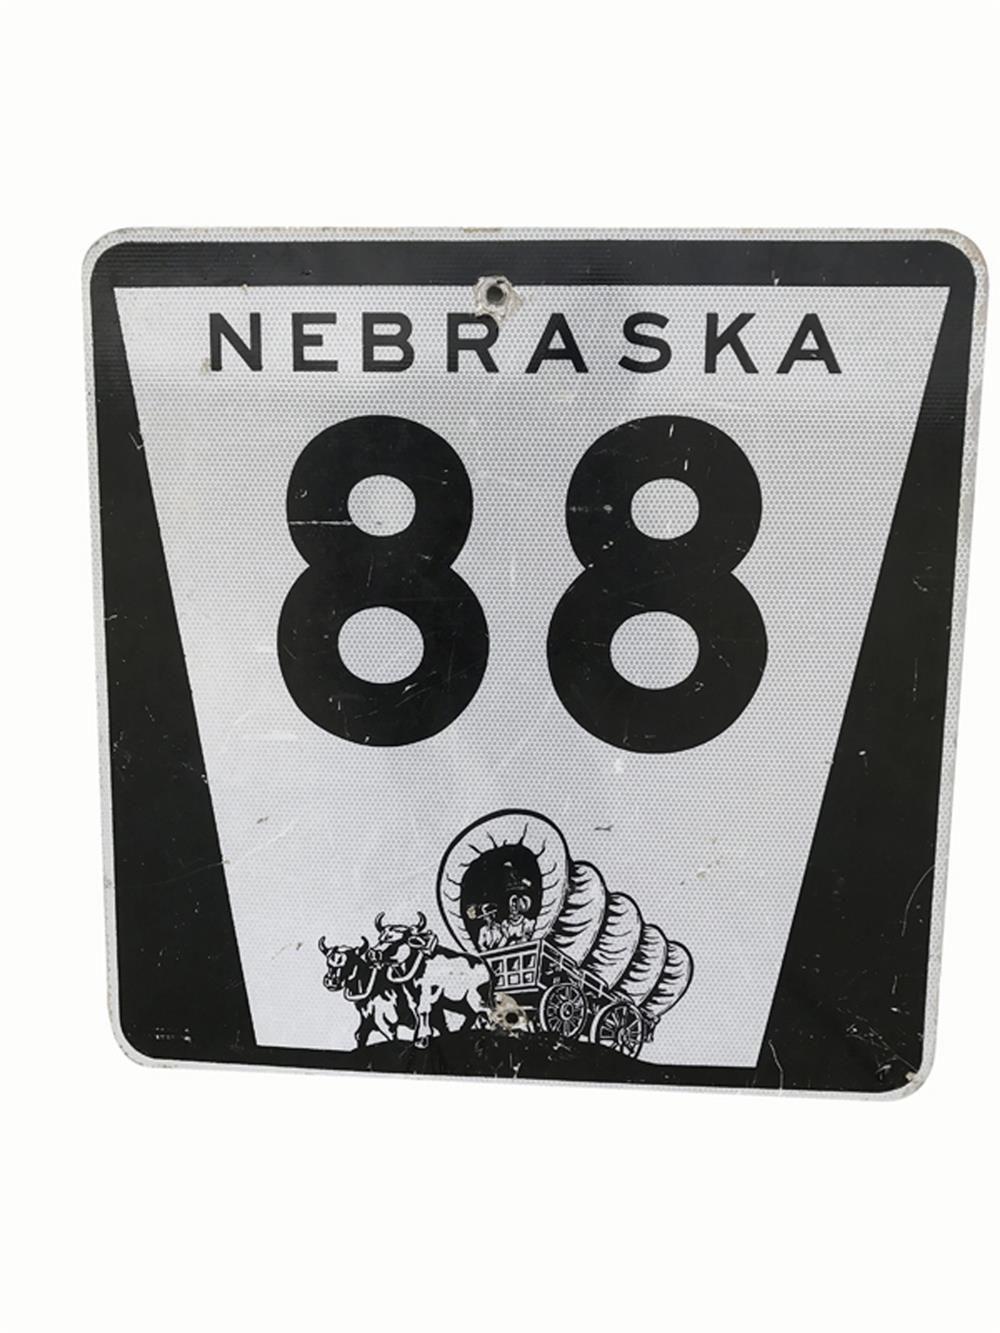 Wagon Circle Logo - Vintage Nebraska 88 metal highway road sign with Pioneer cove